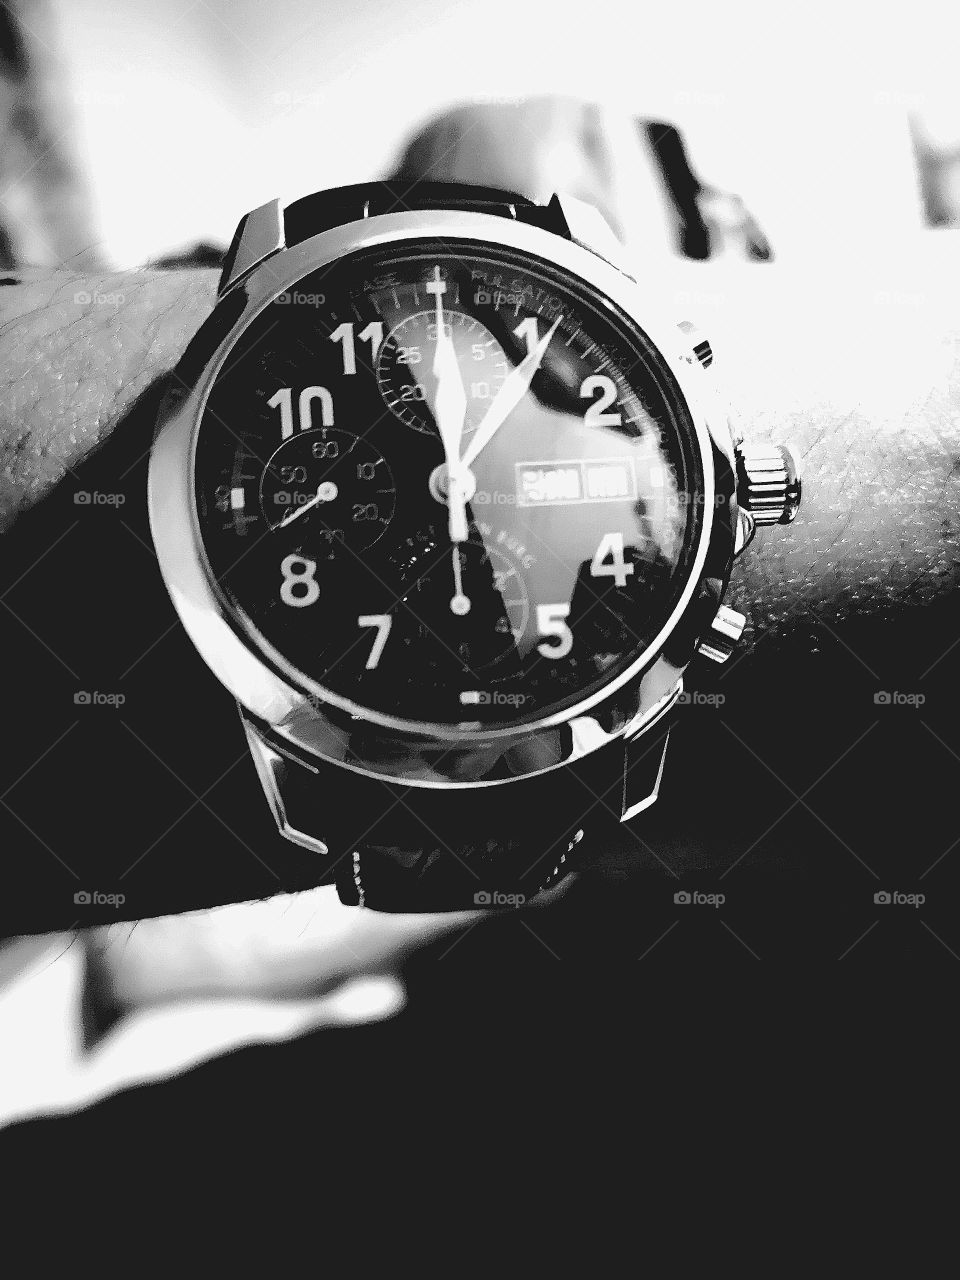 10-11-18 Swiss made watch monochrome